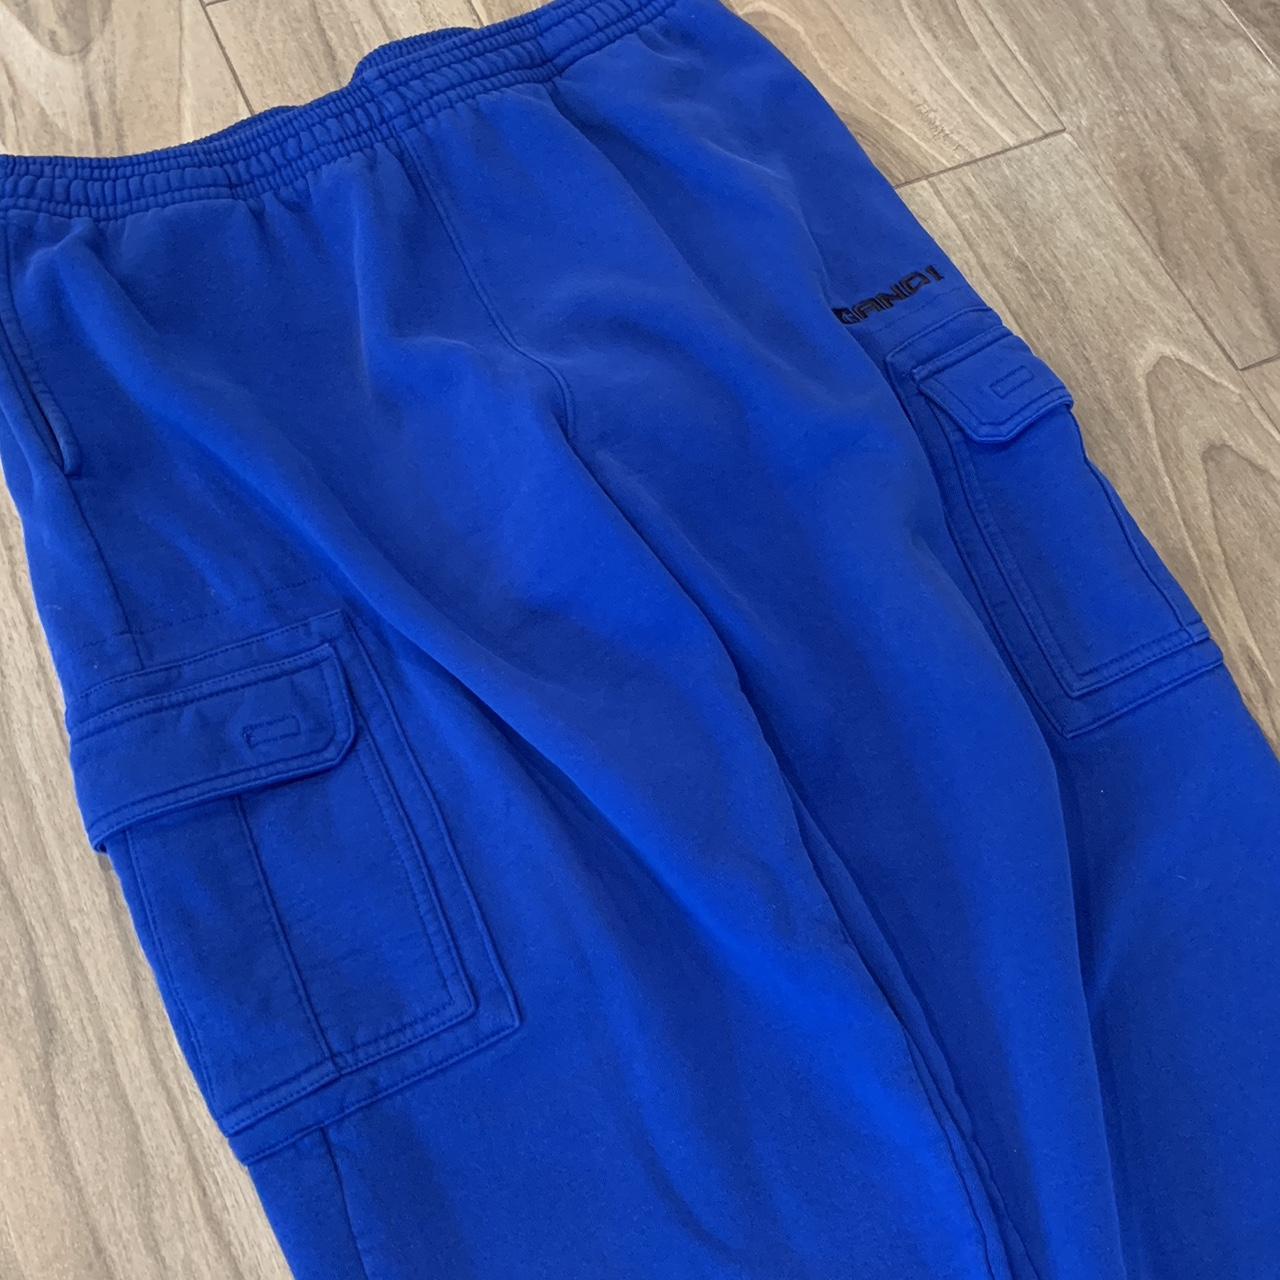 XL Blue AND1 Sweatpants Cargo Pocket Waist:... - Depop